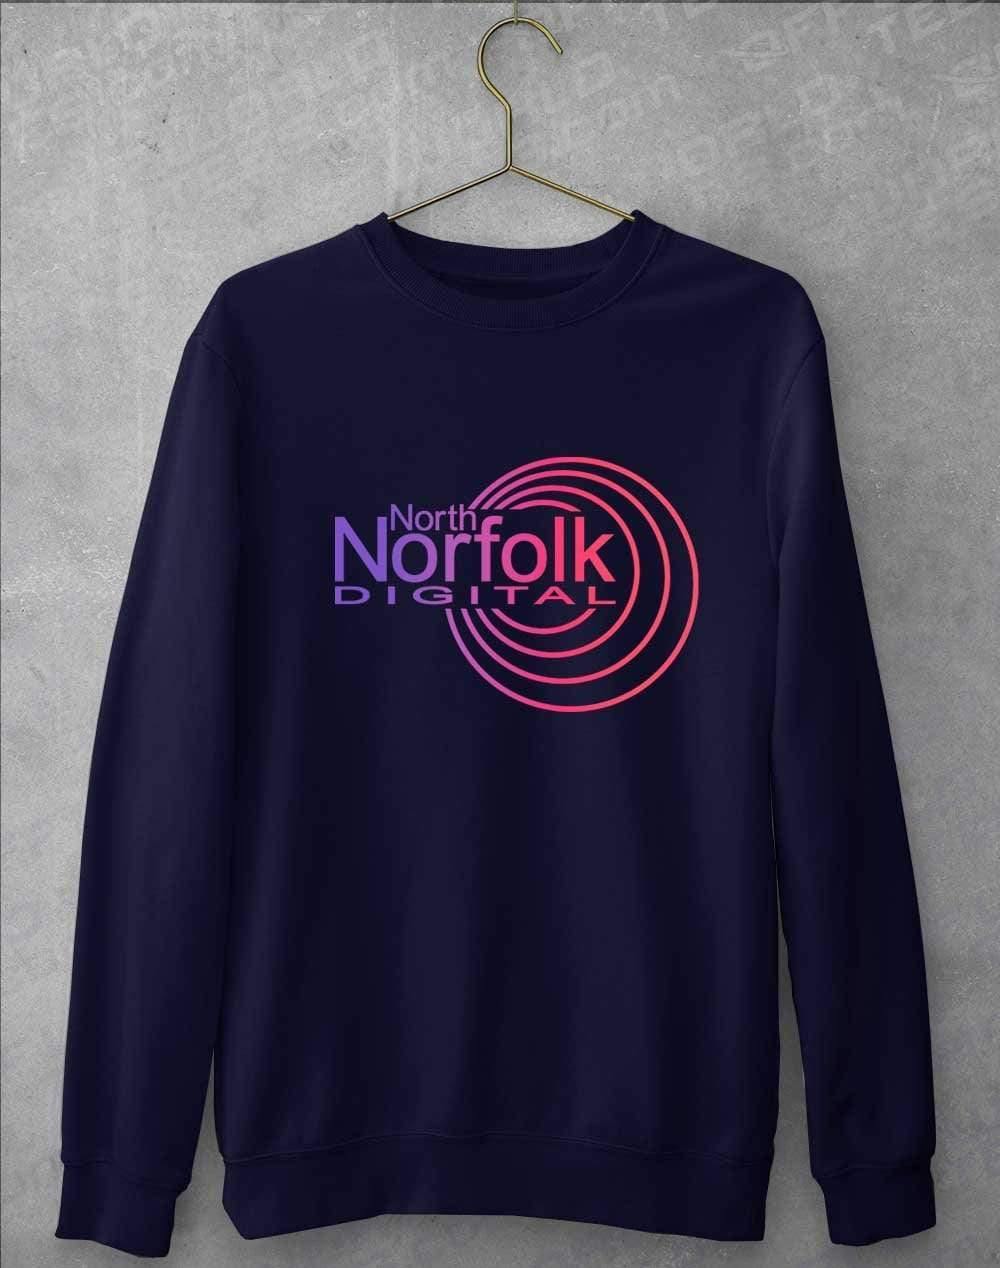 North Norfolk Digital Sweatshirt S / Oxford Navy  - Off World Tees